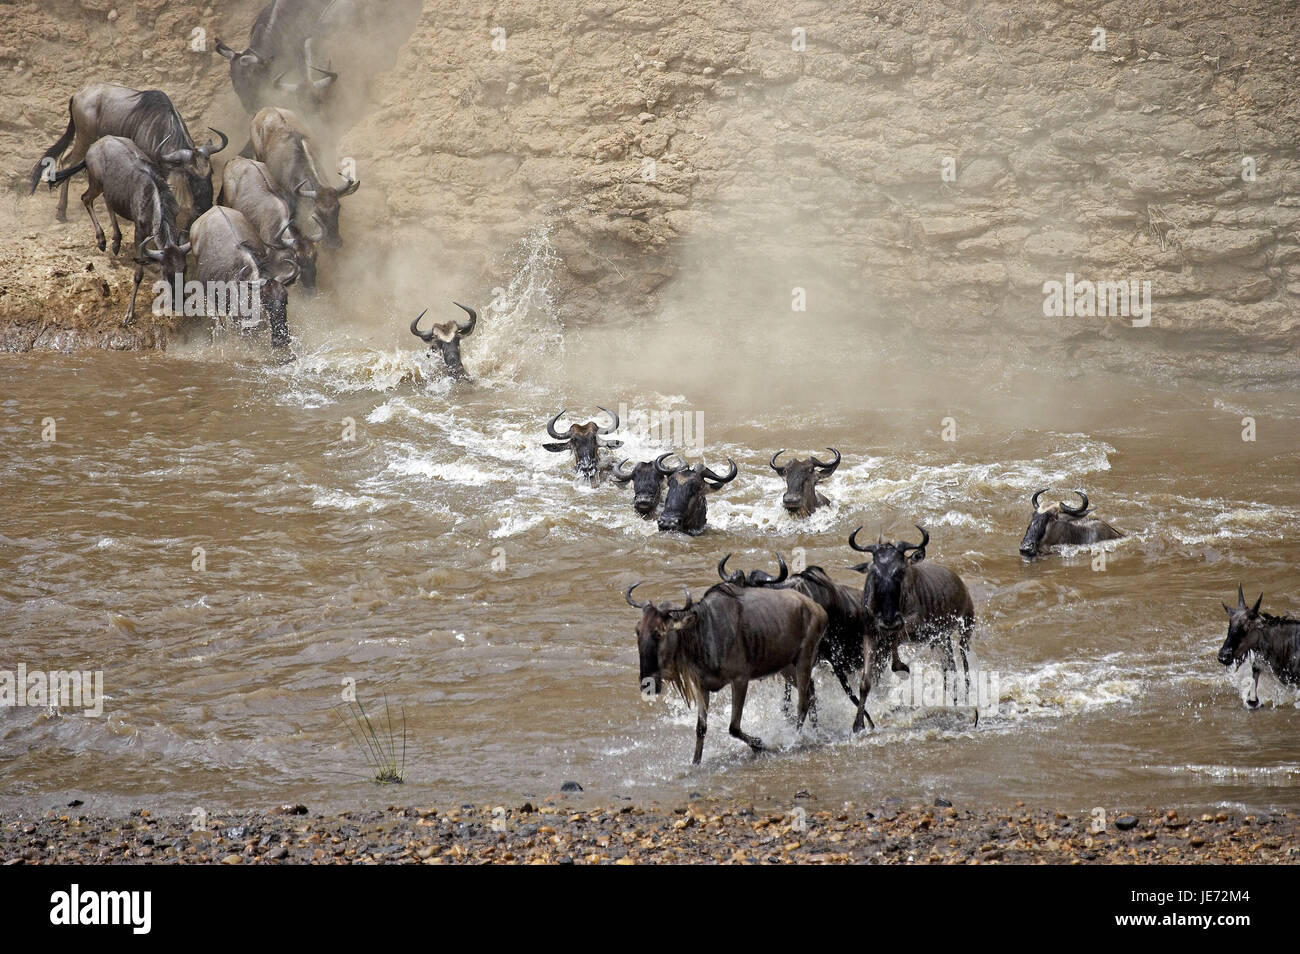 Film gnu, Connochaetes taurinus, si concentra, si allontanano, croce, fiume di Mara, Masai Mara Park, Kenya, Foto Stock